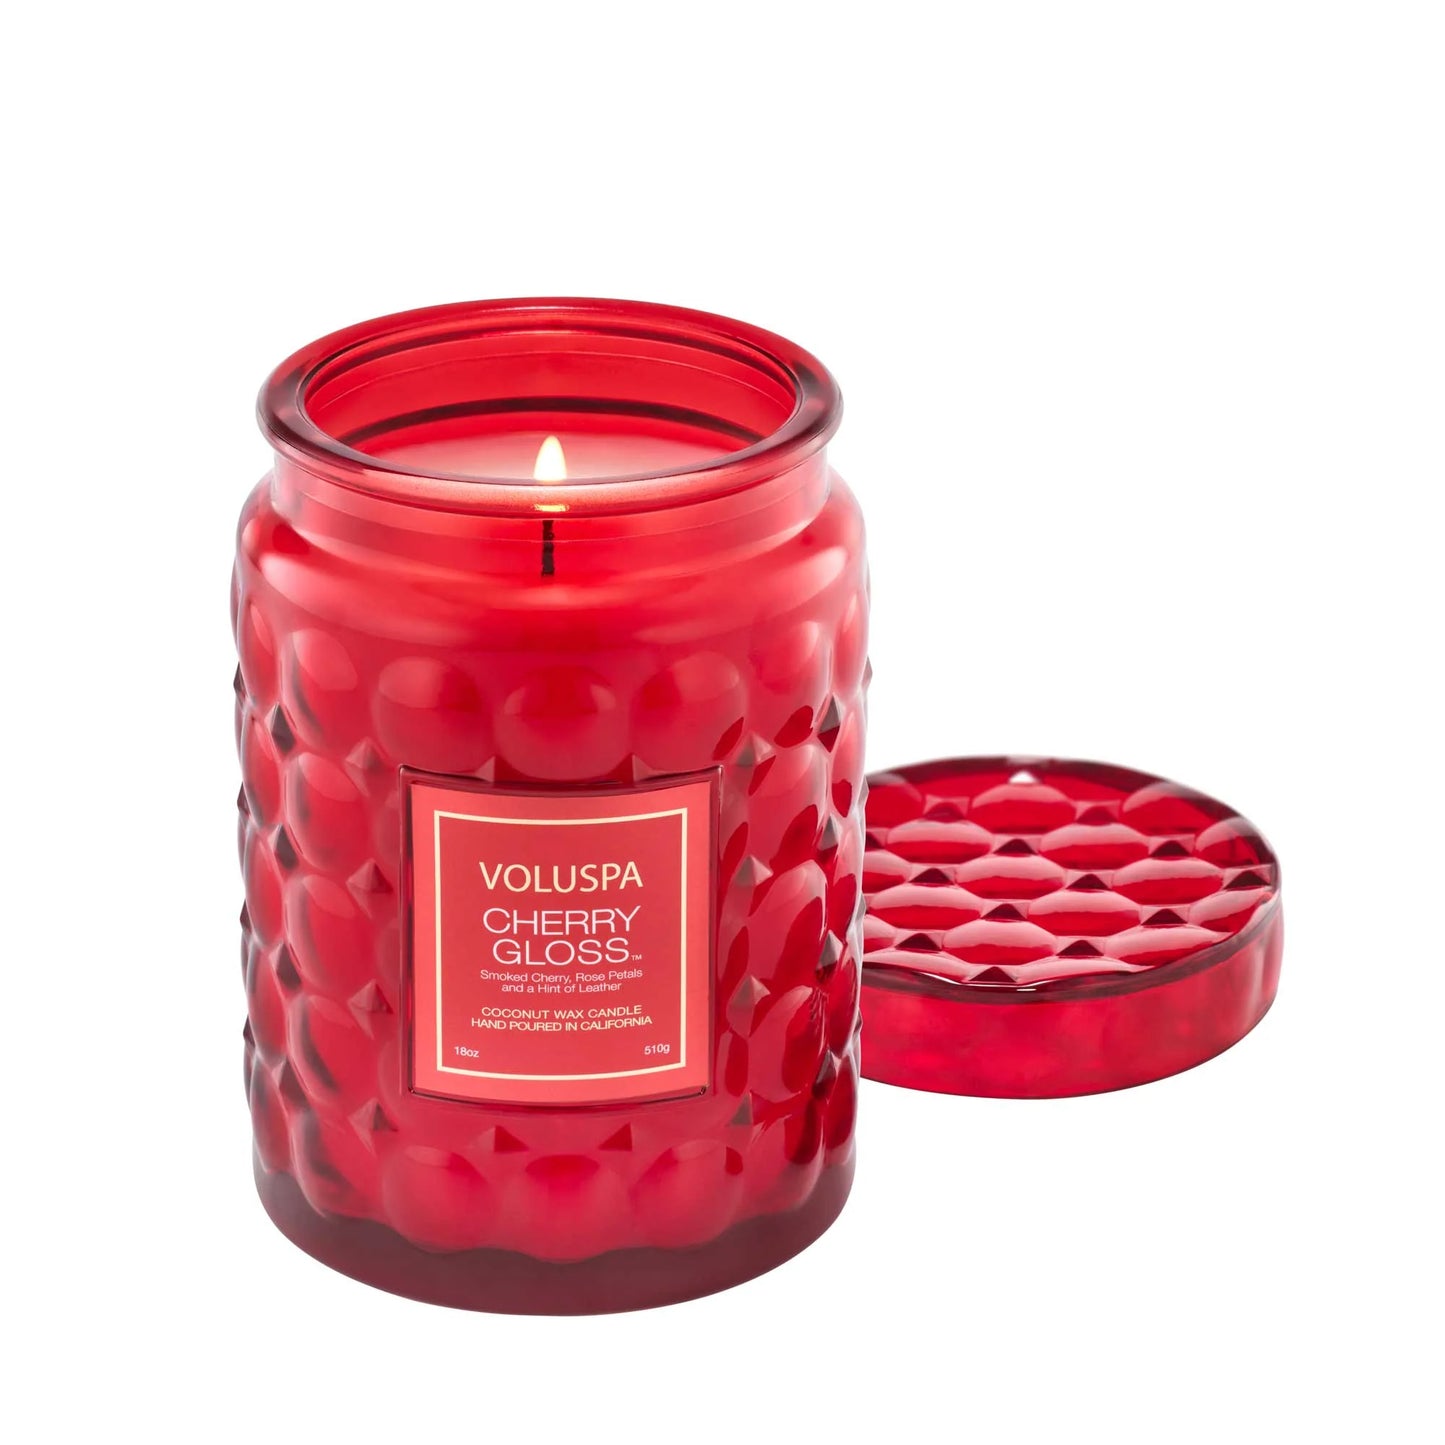 Voluspa Cherry Gloss Large Jar Candle